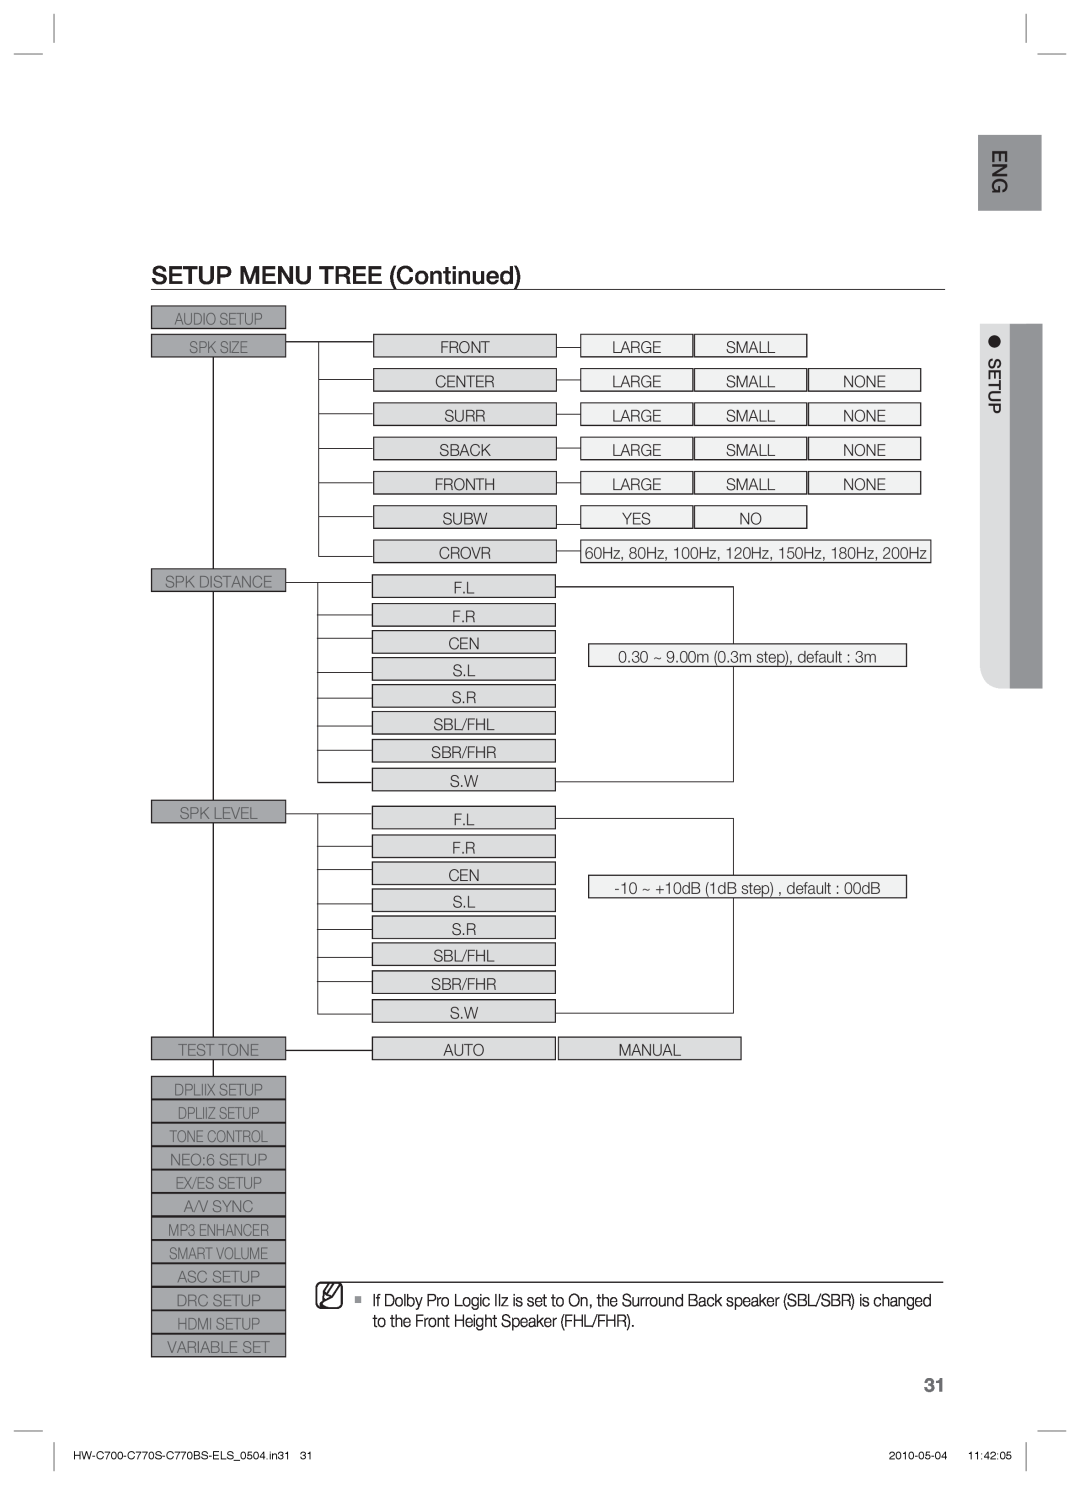 Samsung HW-C770S/EDC SETUP MENU TREE Continued, Audio Setup Spk Size Spk Distance Spk Level Test Tone Dpliix Setup 